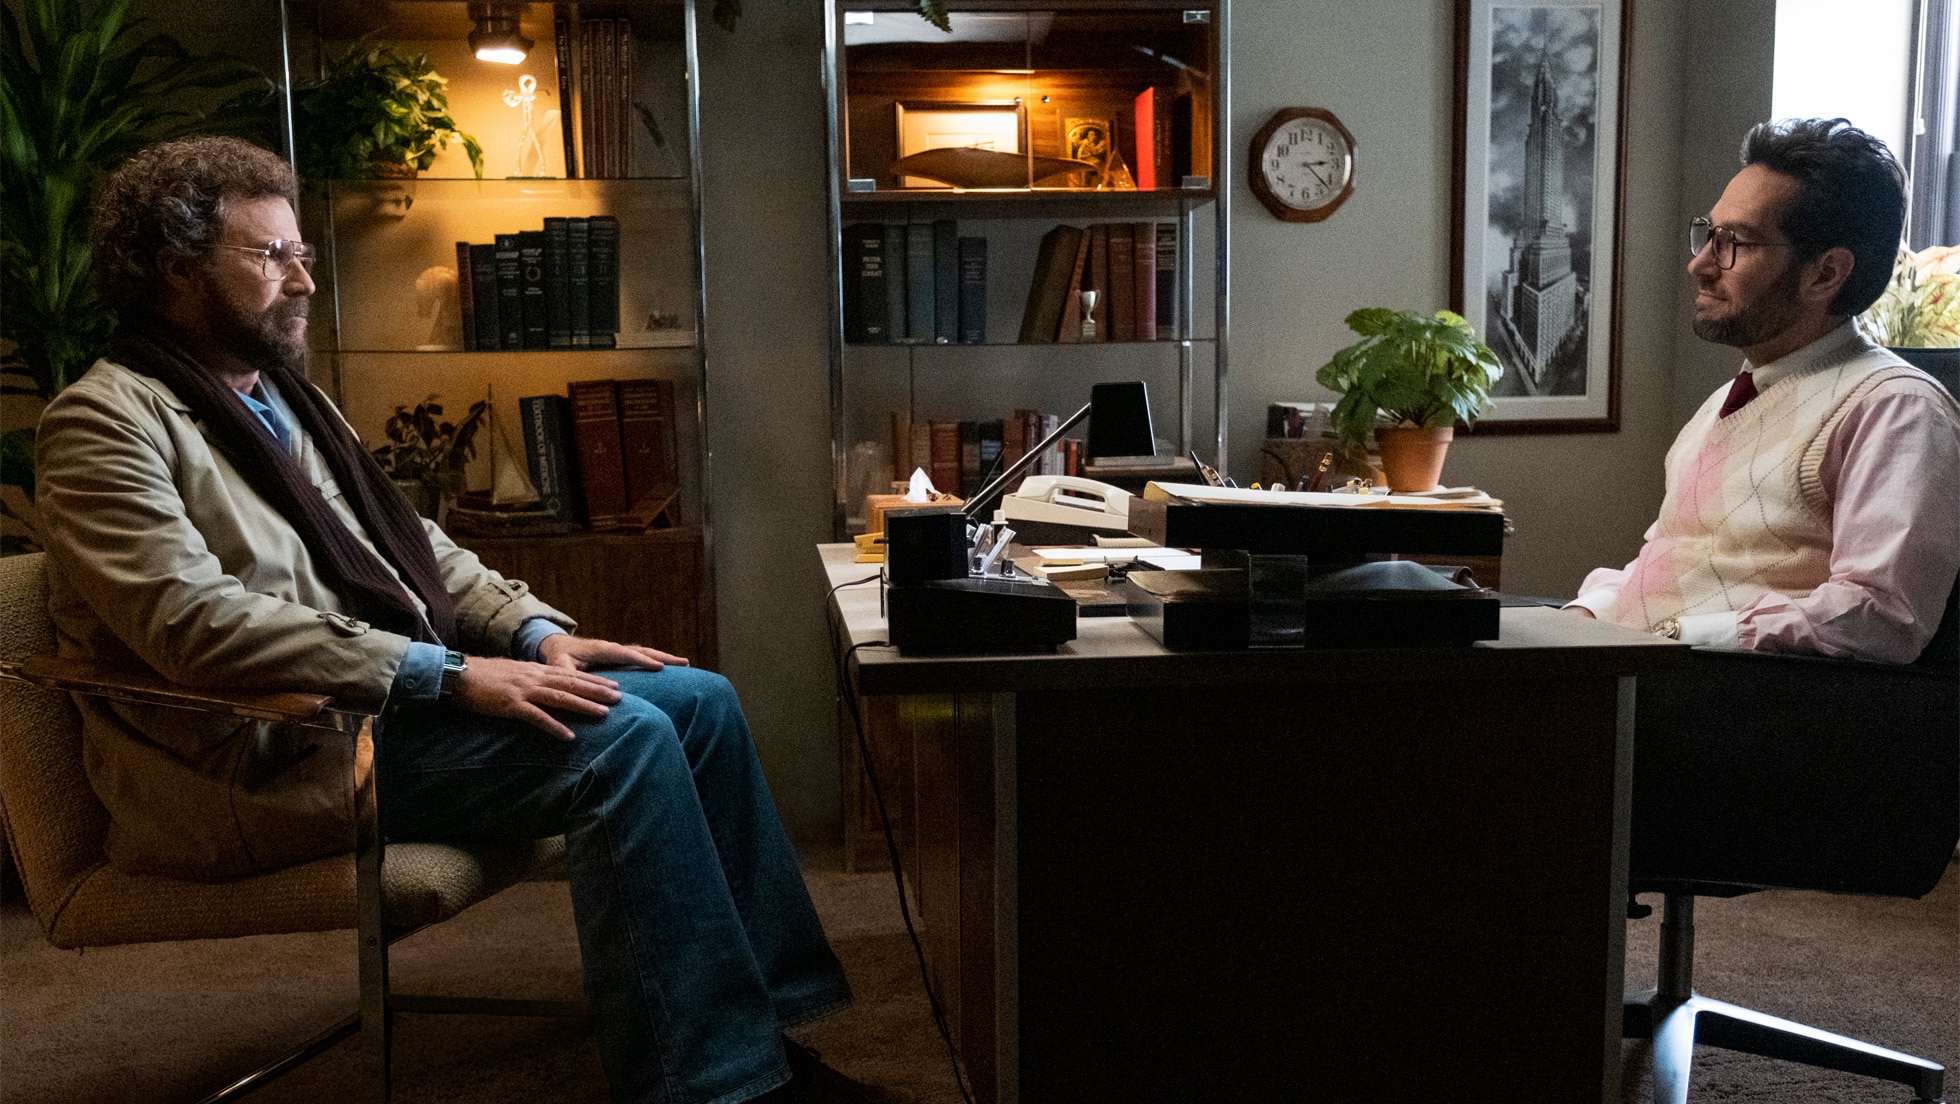 Will Ferrell and Paul Rudd star in “The Shrink Next Door,” premiering globally Friday, November 12 on Apple TV+.